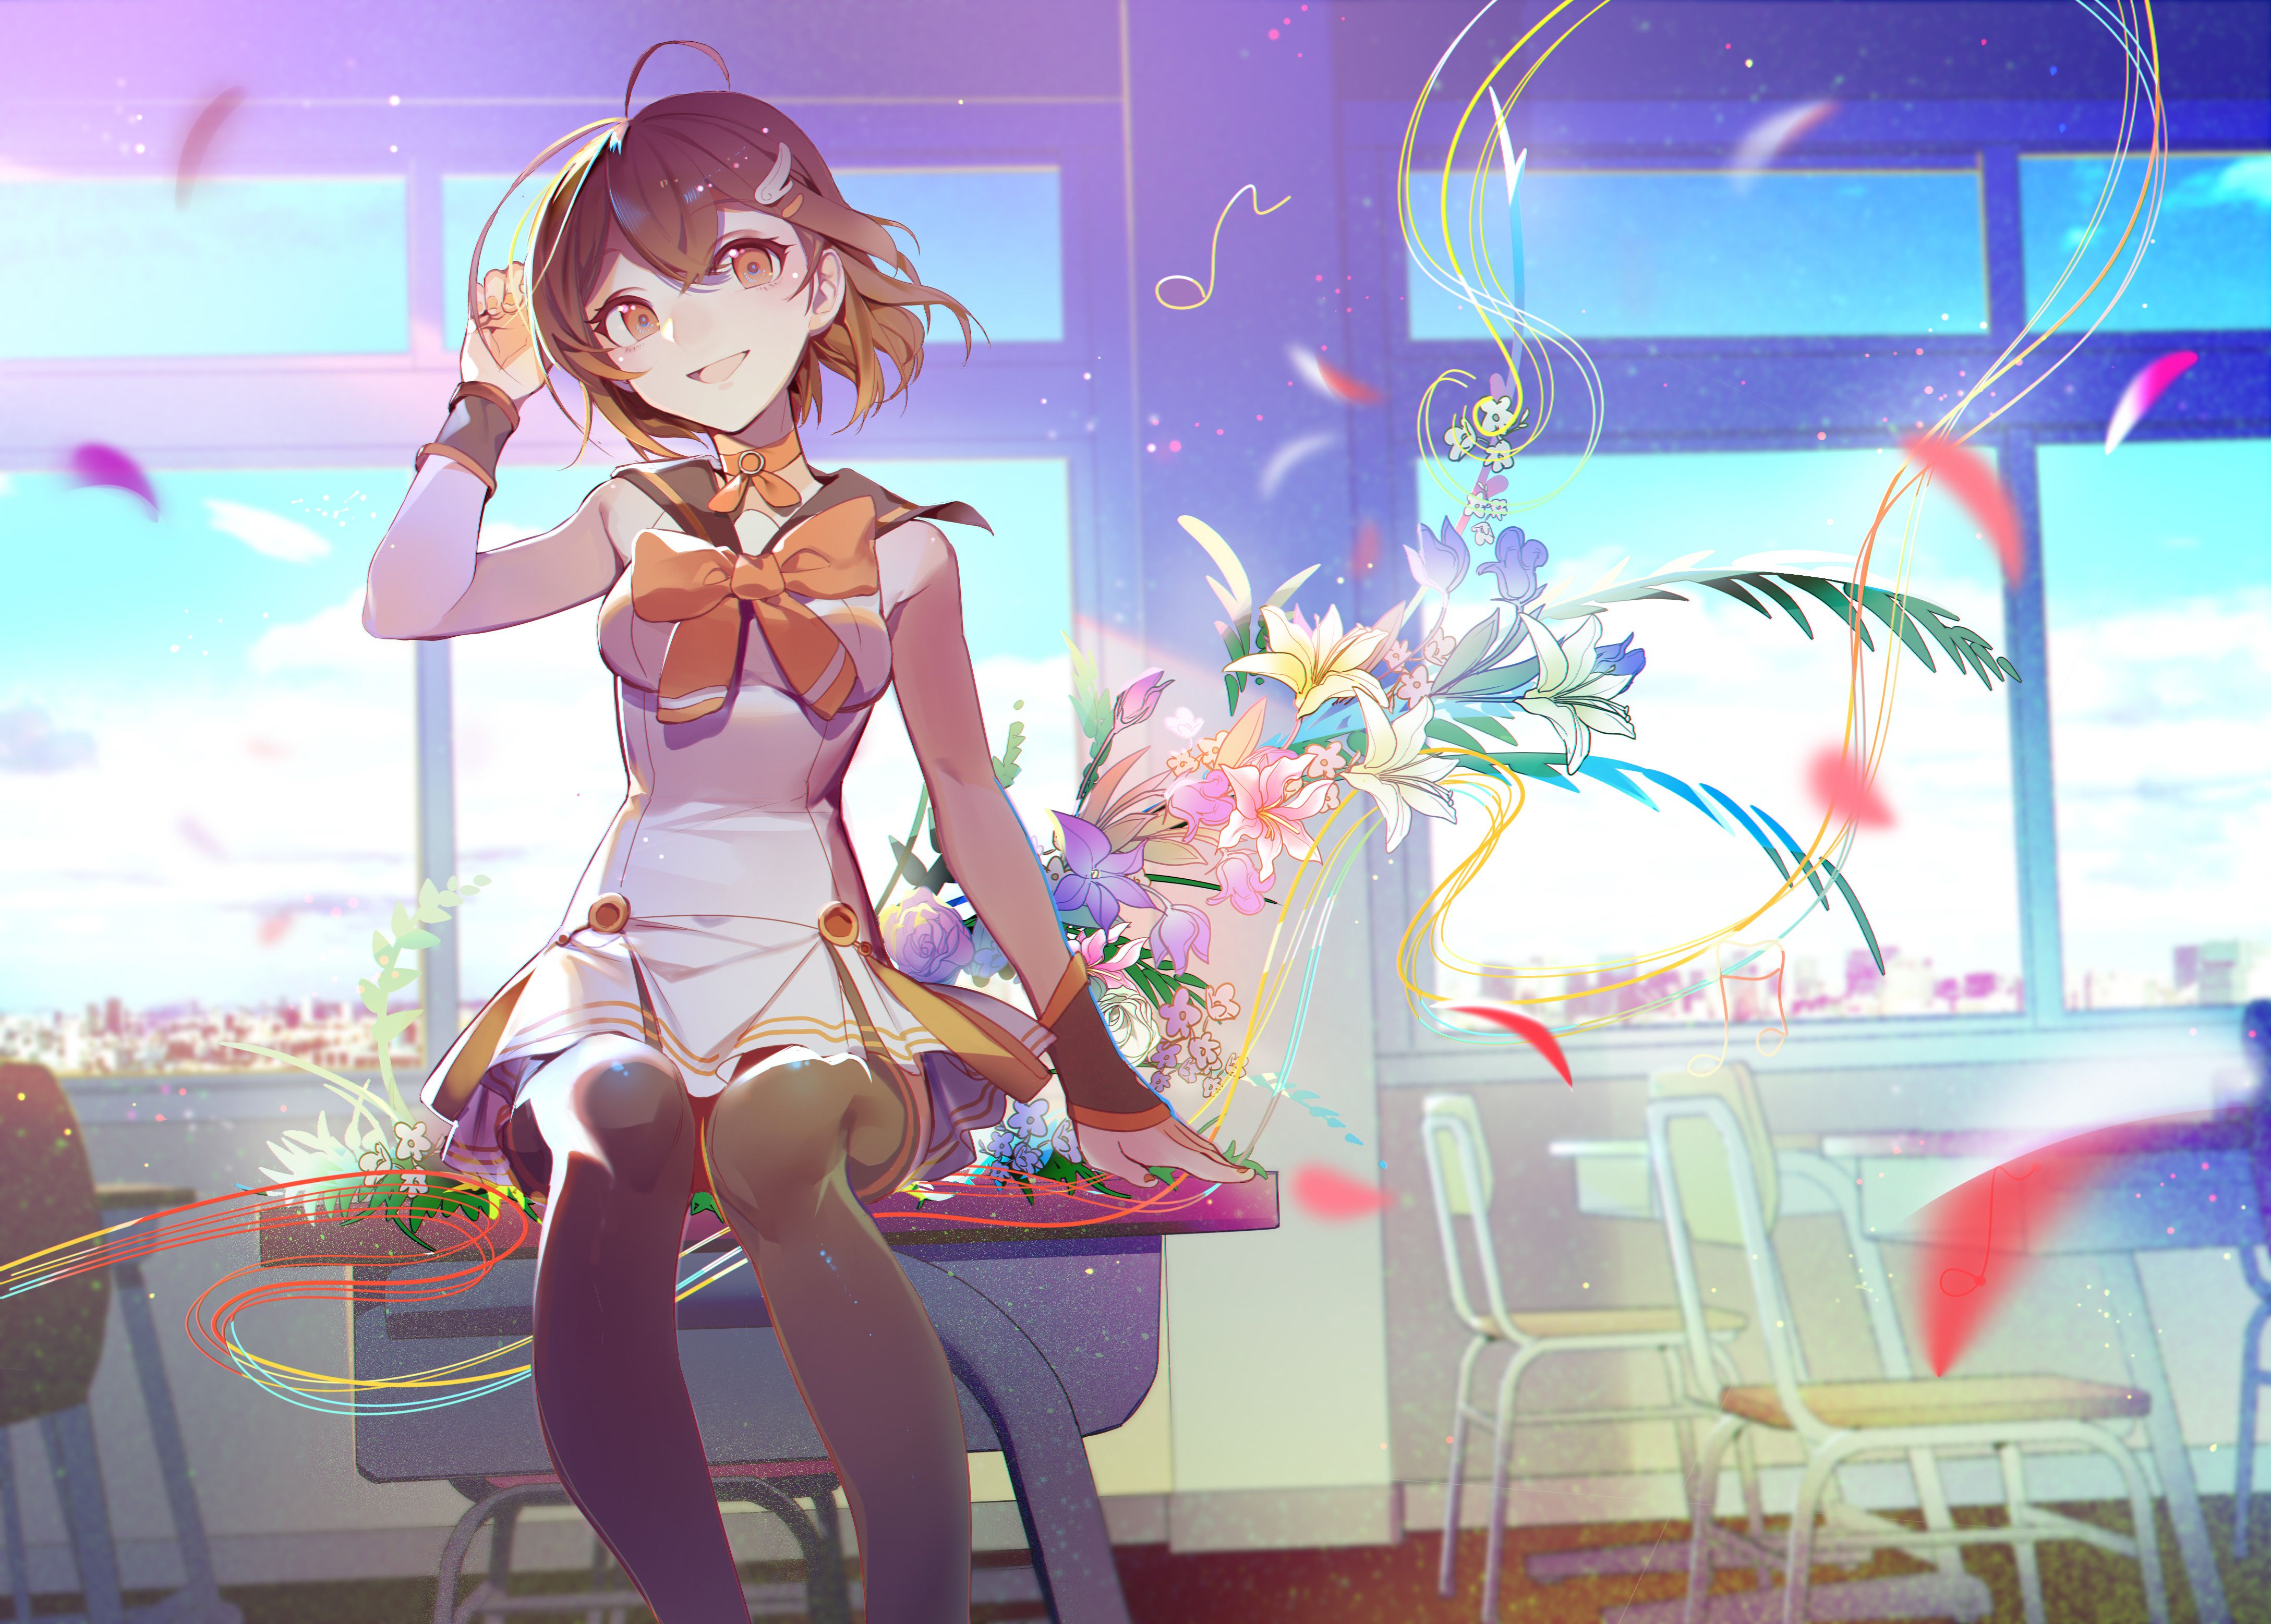 4k Anime Girl In School Uniform, HD Anime, 4k Wallpaper, Image